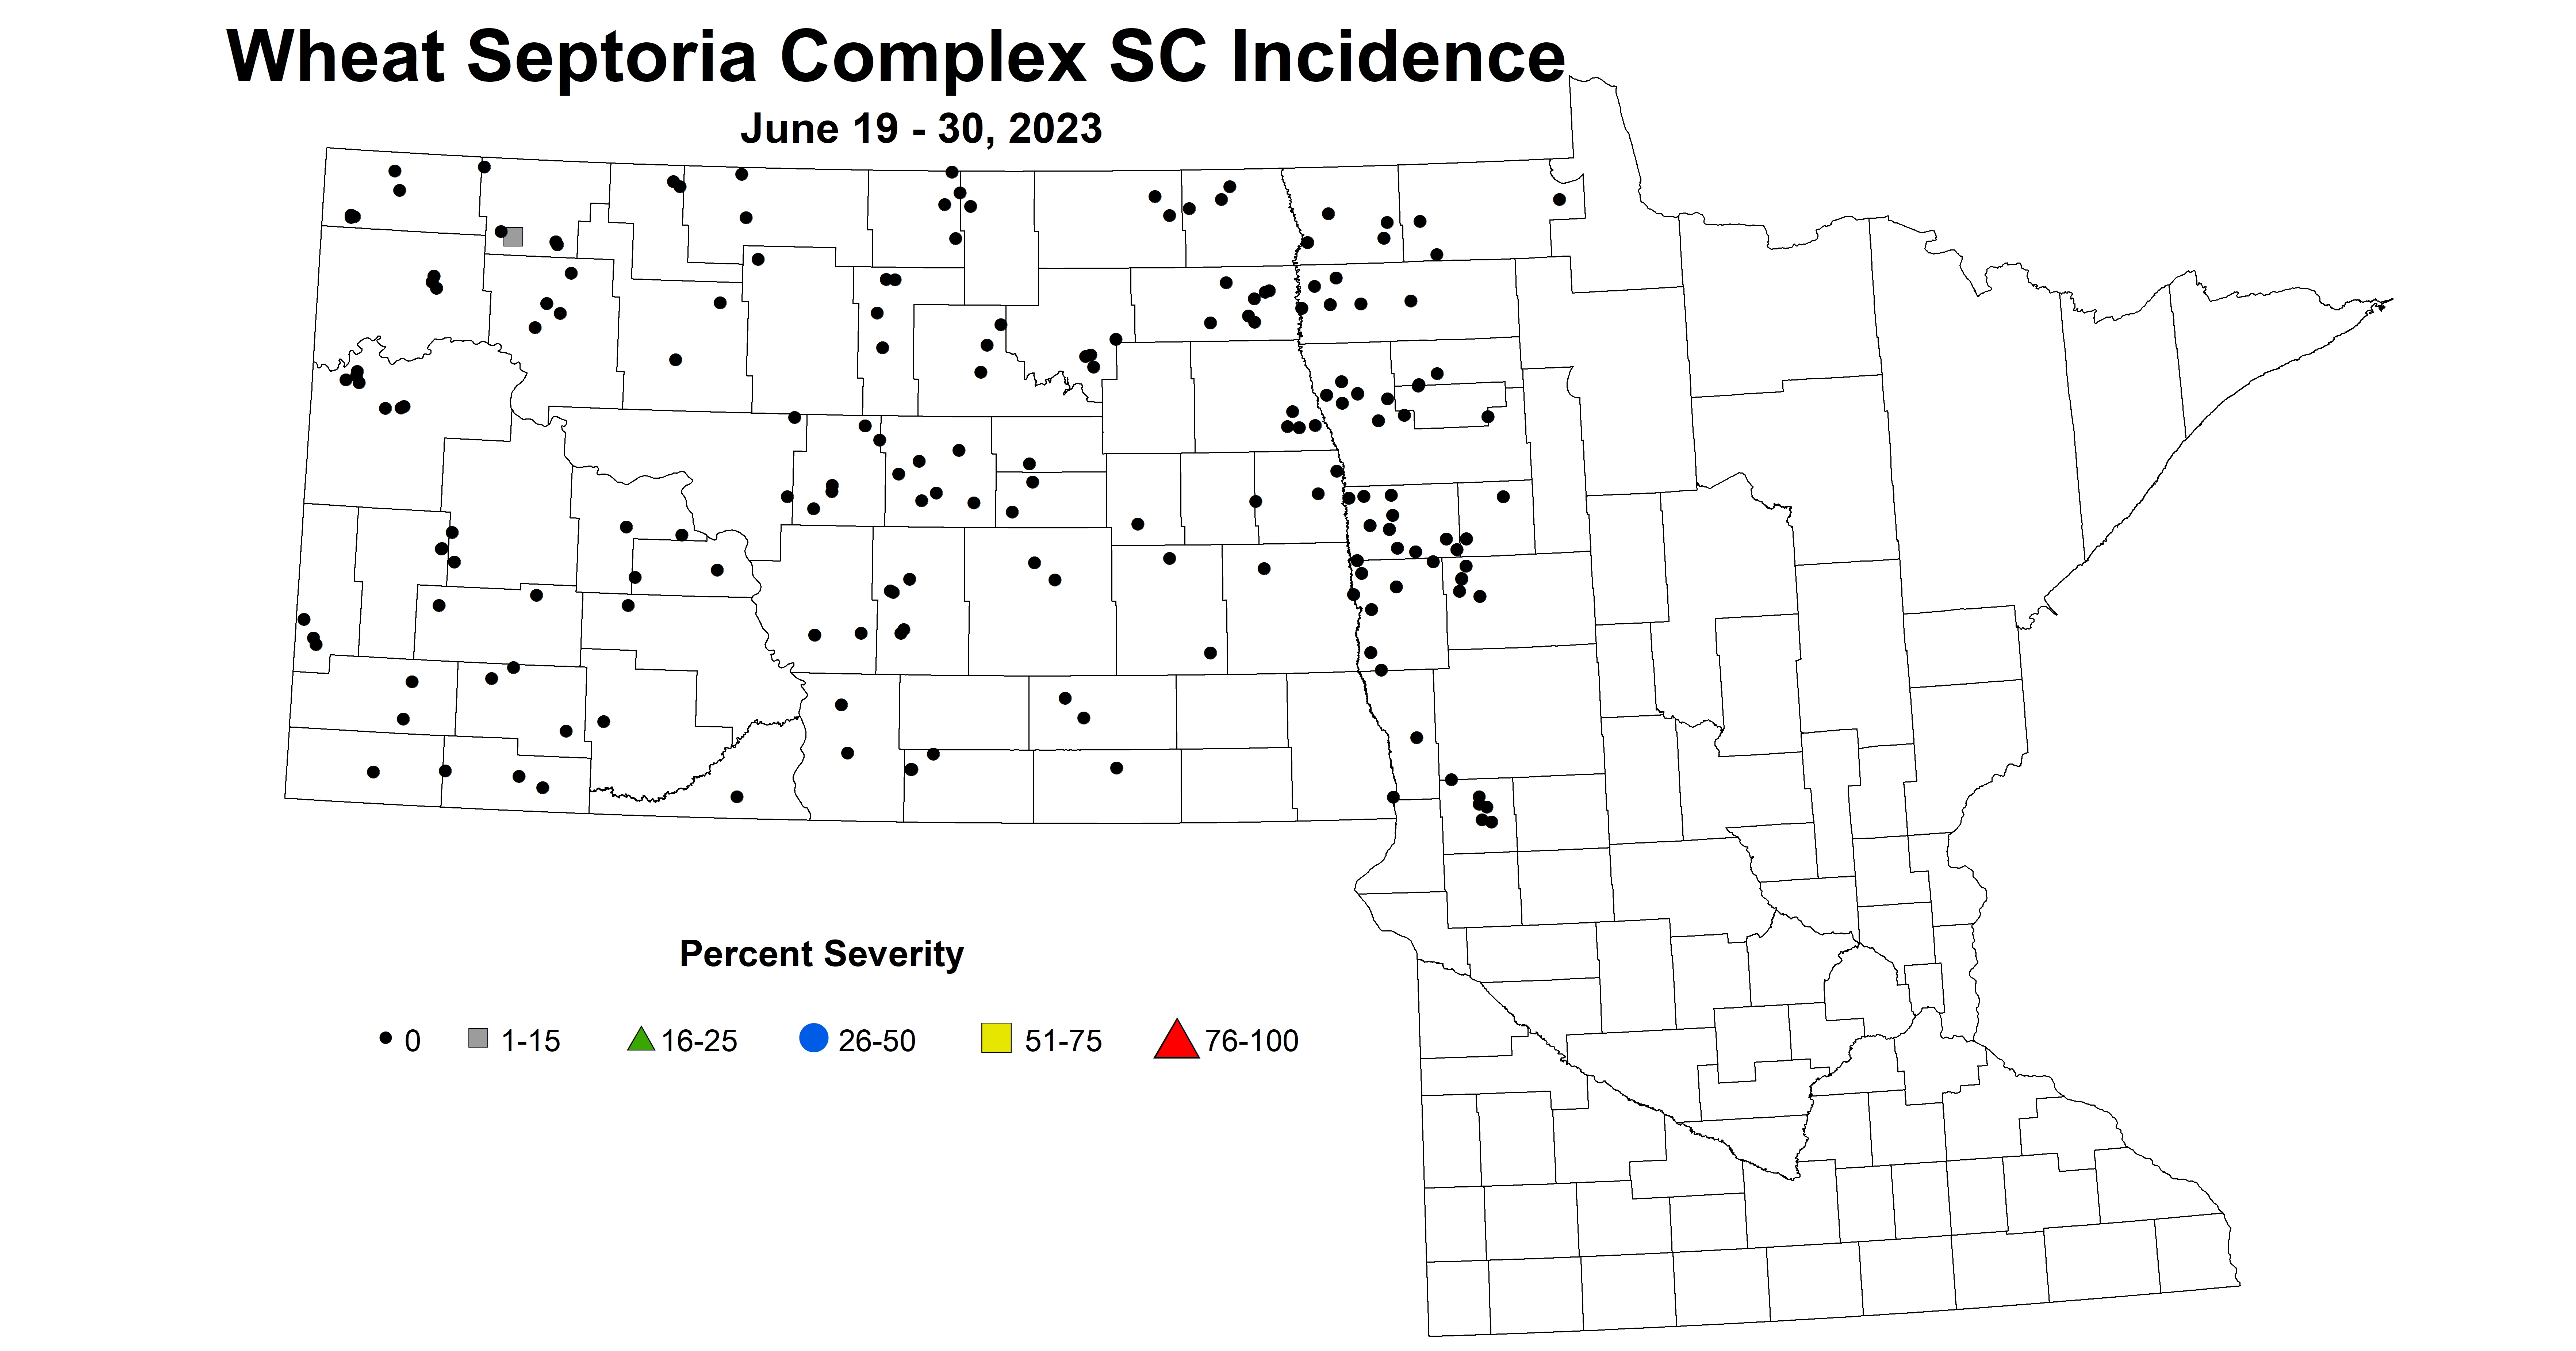 wheat septoria complex incidence June 19-30 2023